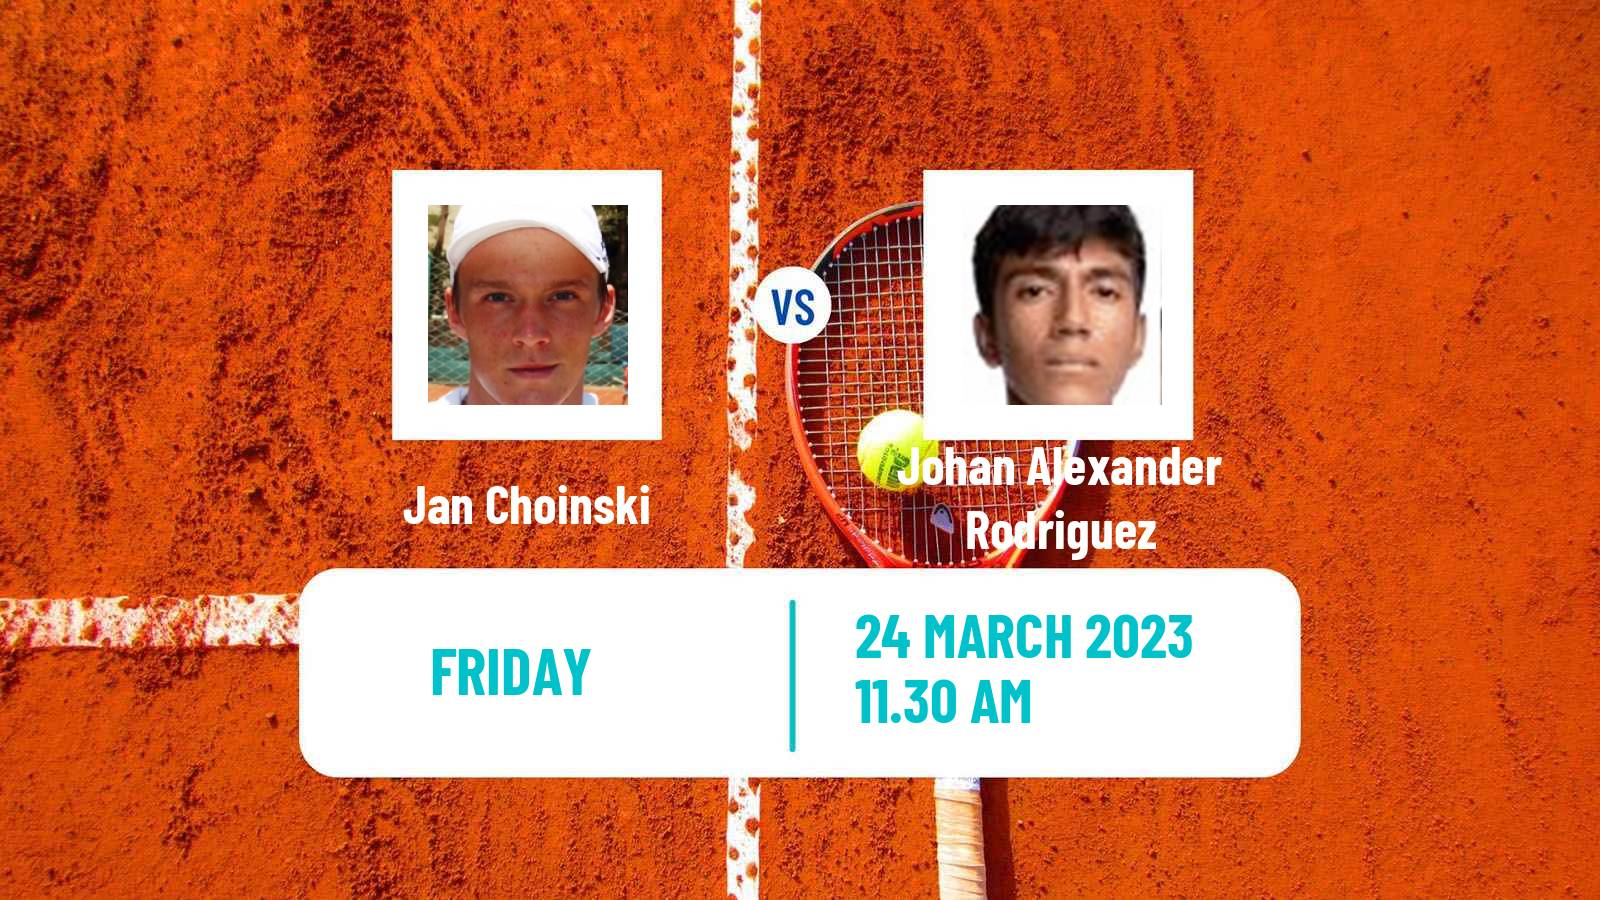 Tennis ITF Tournaments Jan Choinski - Johan Alexander Rodriguez